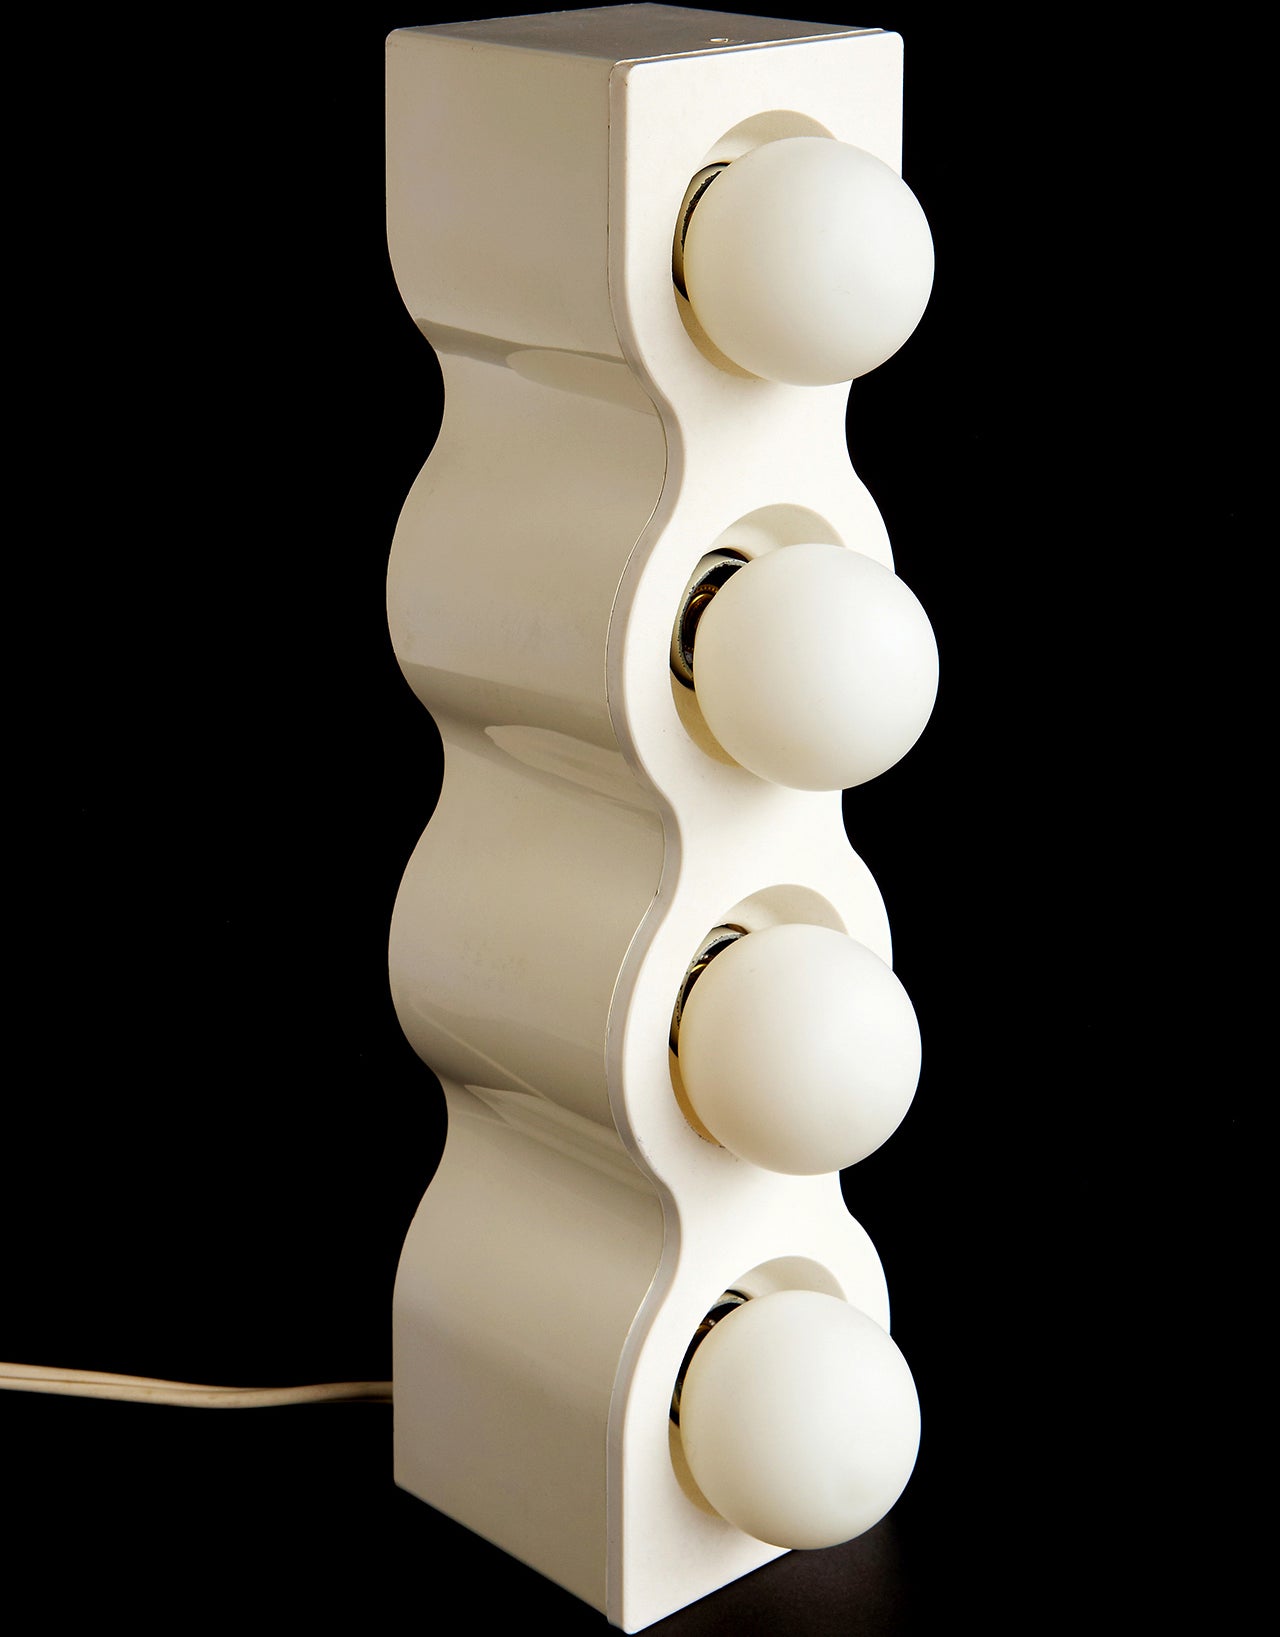 Stilnovo "Sinus" Lamp by Ettore Sottsass